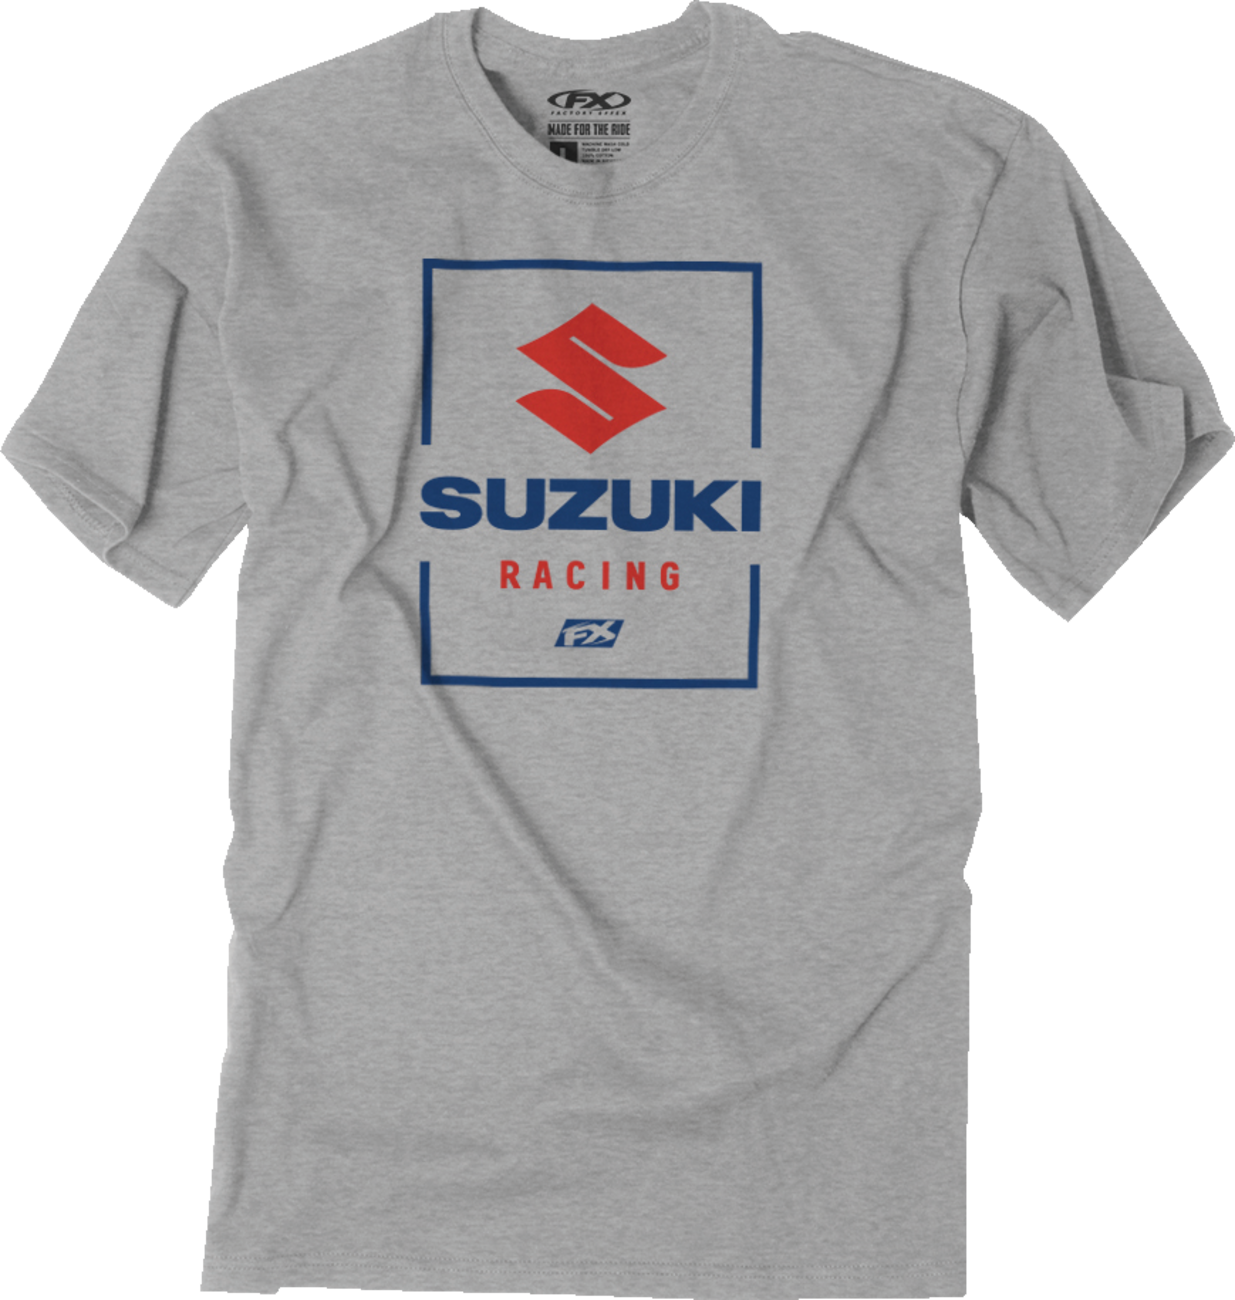 Camiseta FACTORY EFFEX Suzuki Victory - Gris jaspeado - Mediana 26-87402 